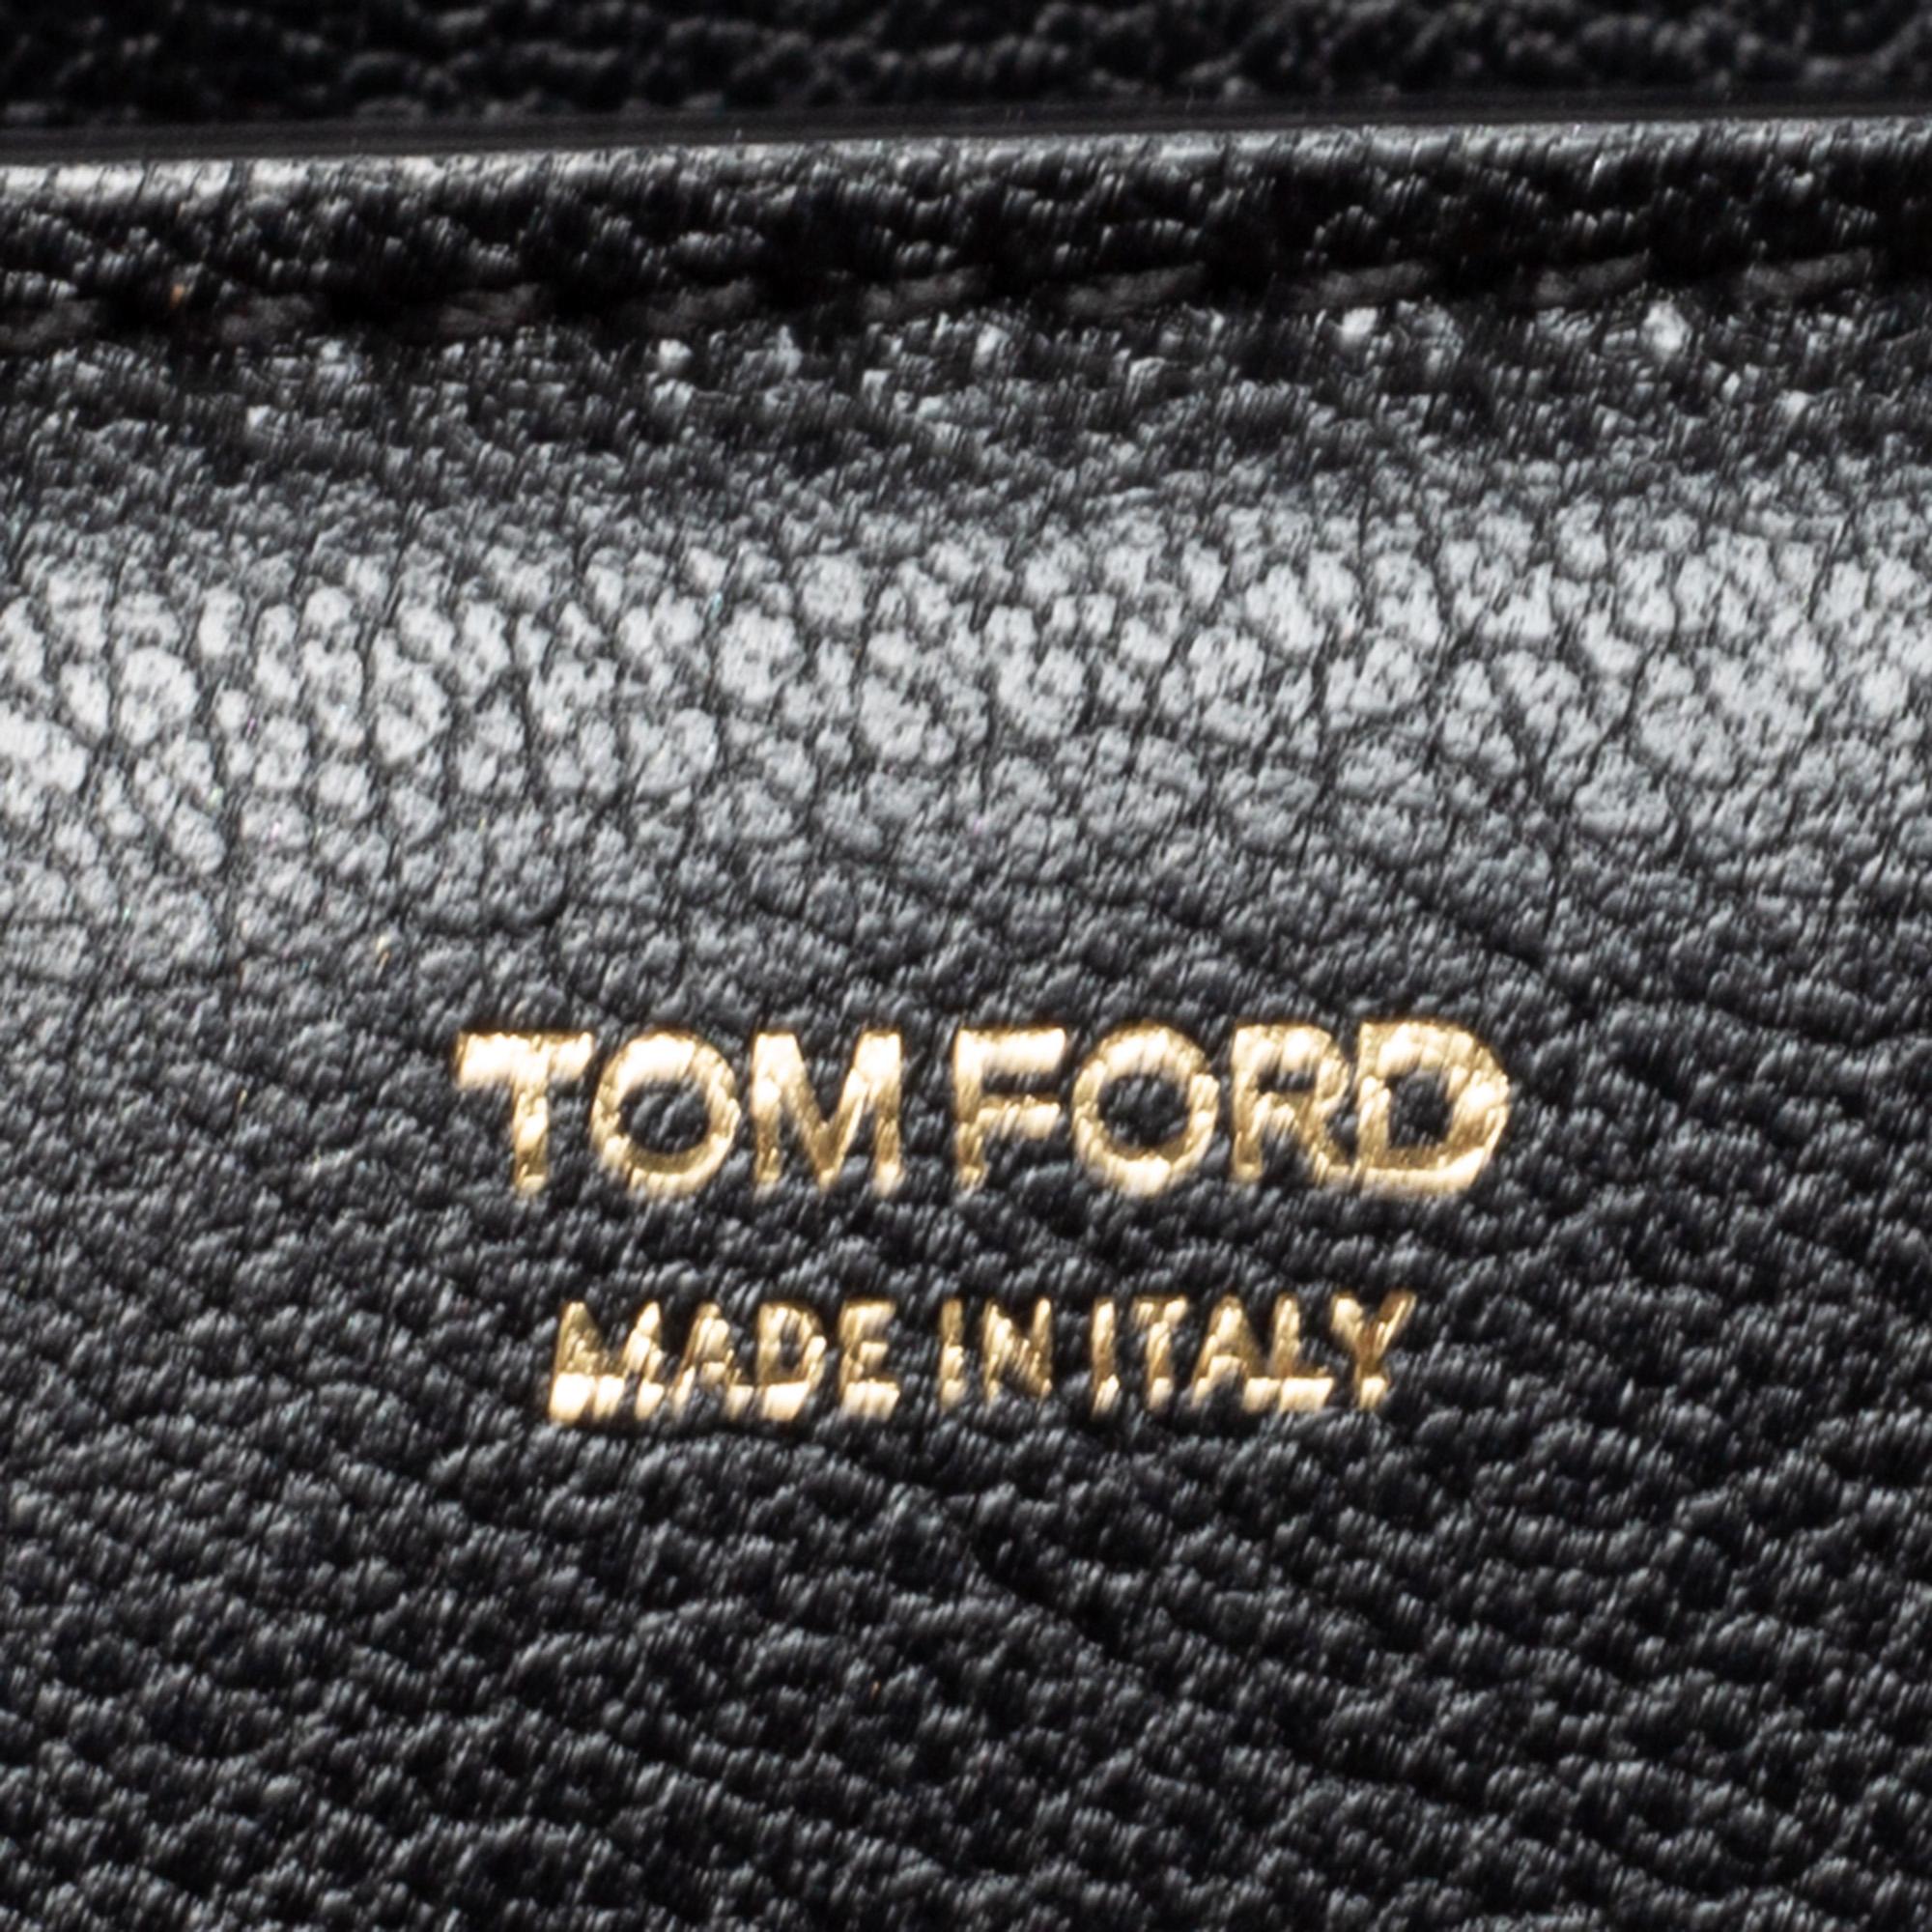 Tom Ford Black Leather Natalia Crossbody Bag 3